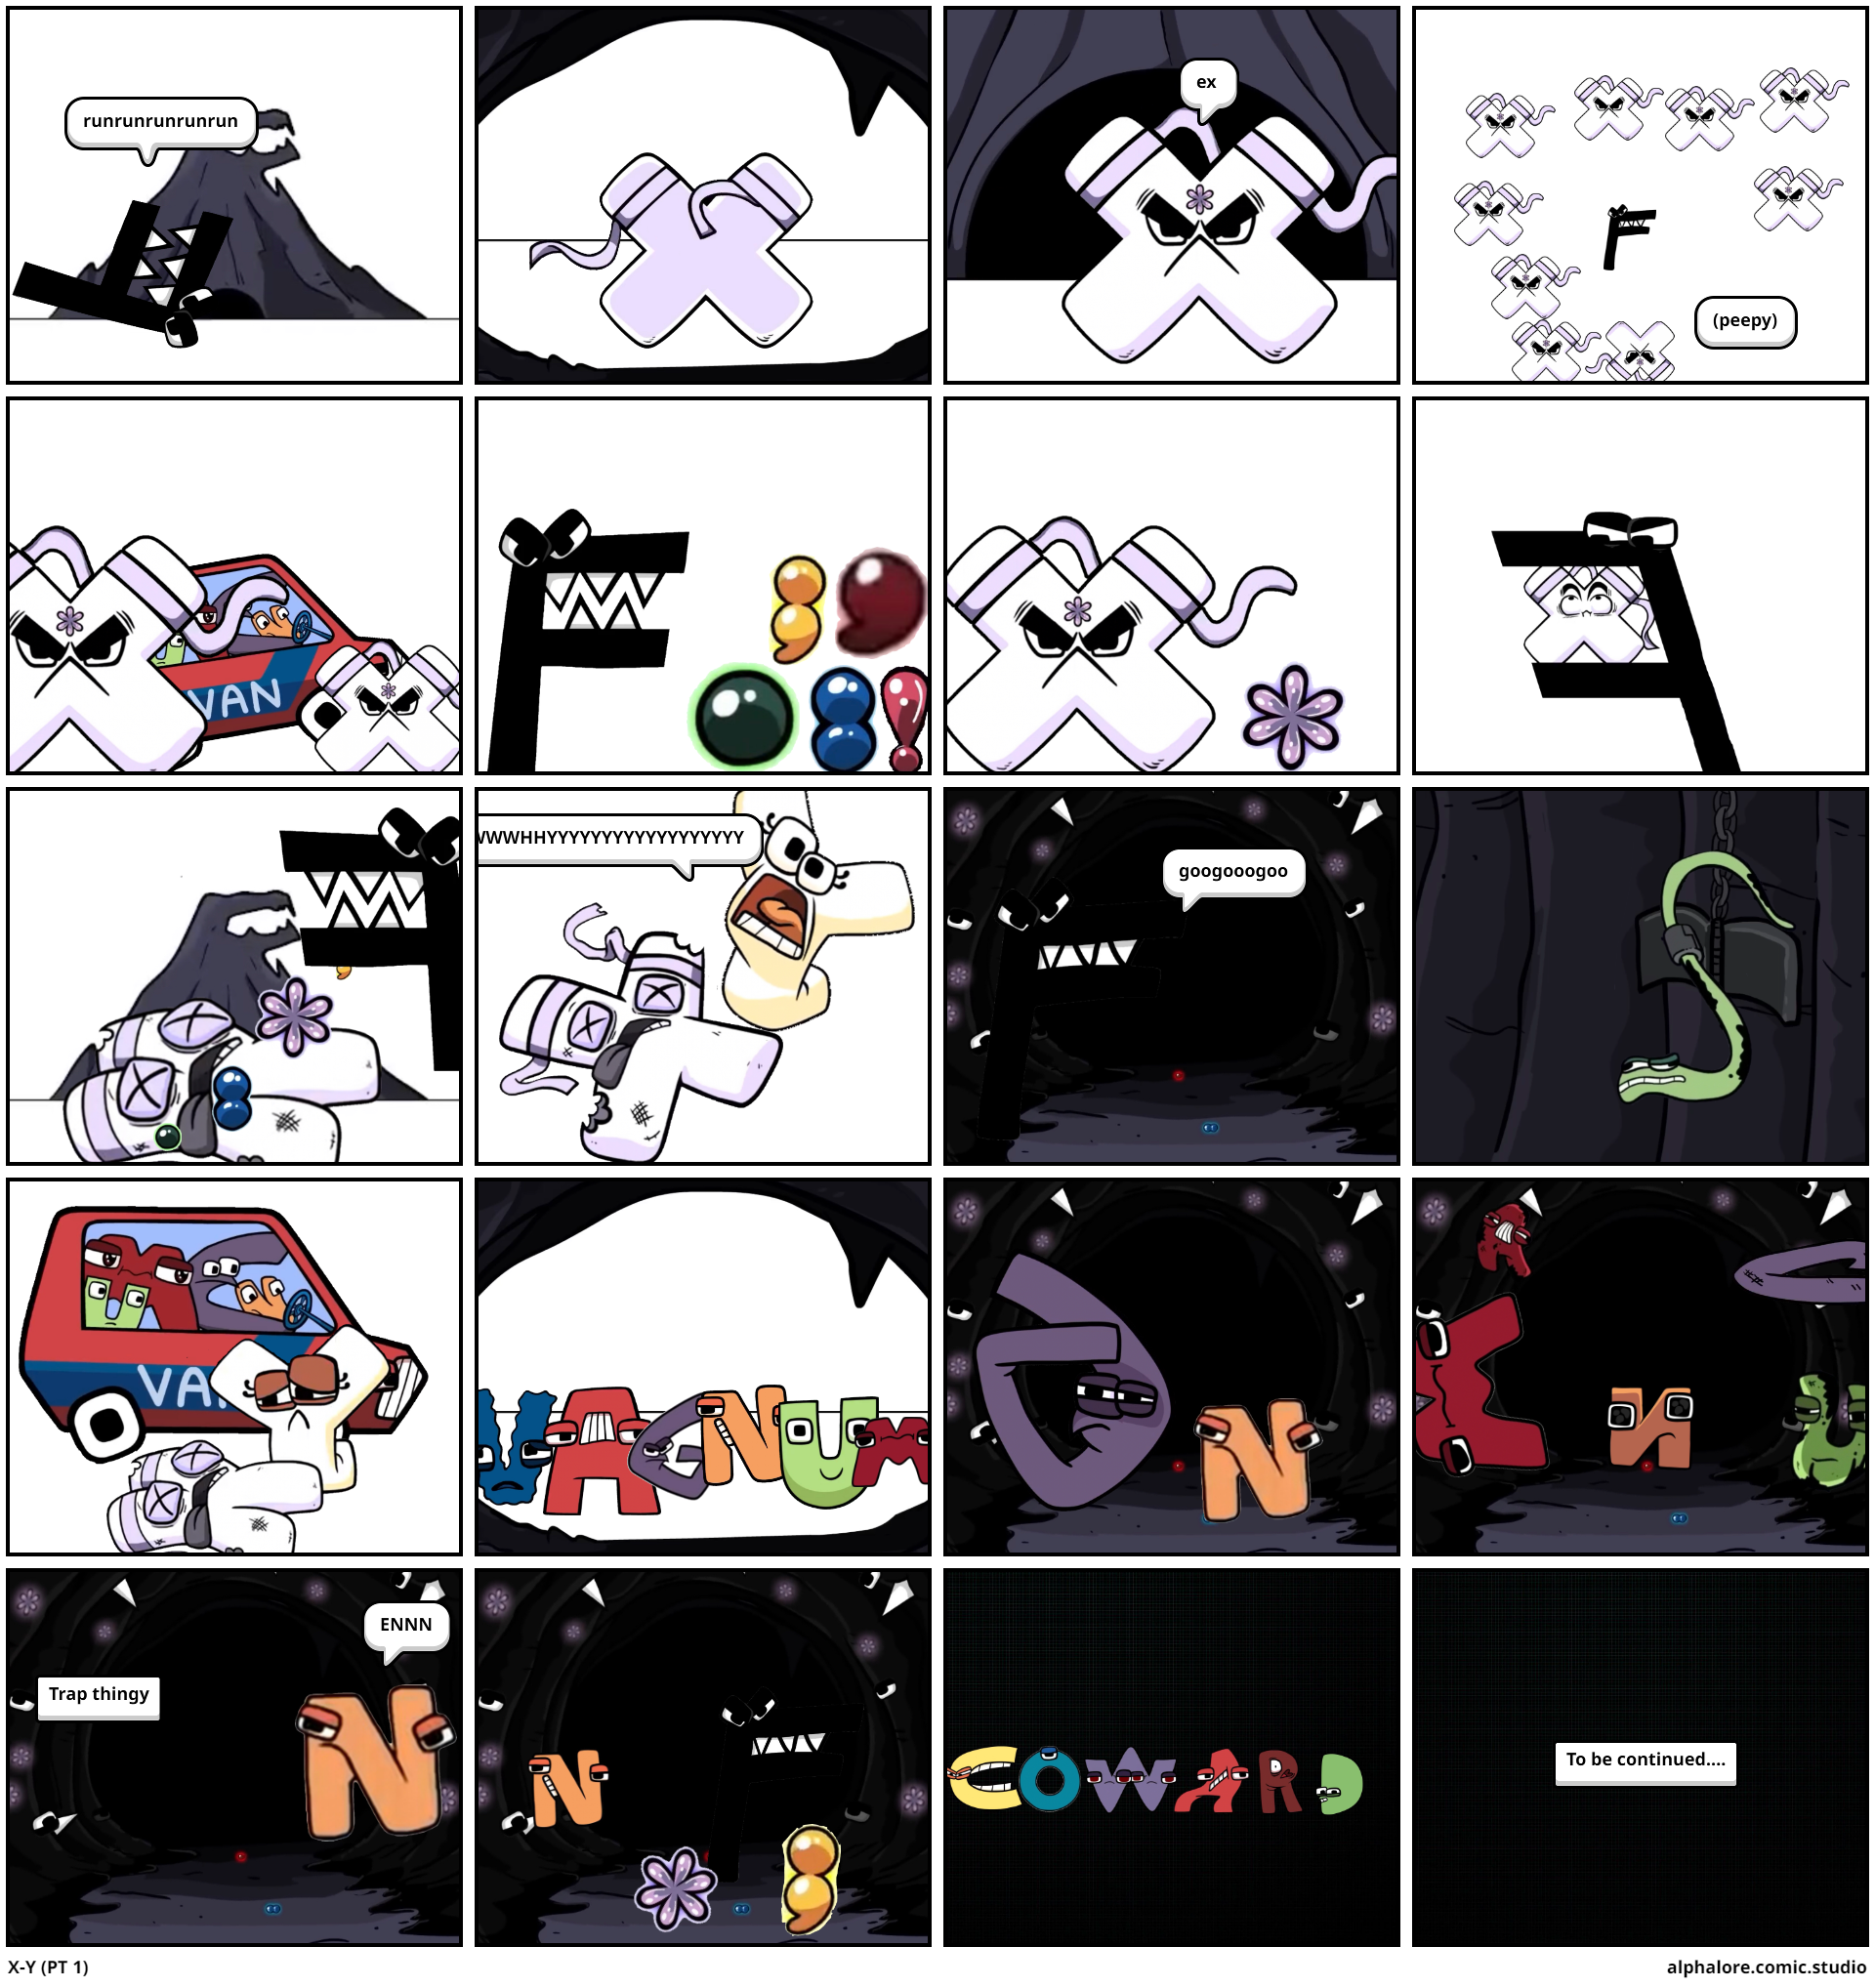 Alphabet lore (Christmas special) X-Y - Comic Studio